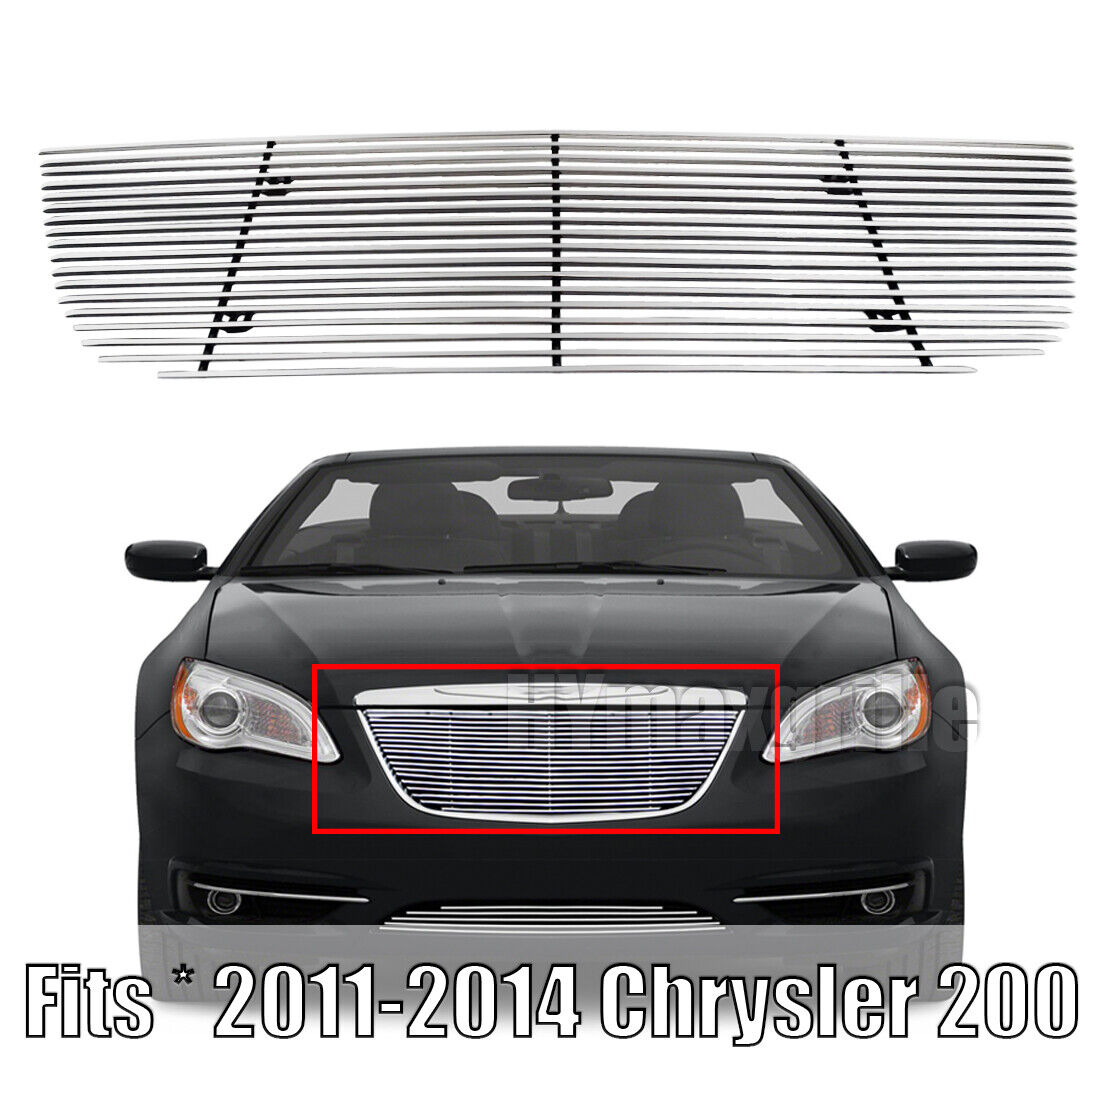 Front Main Upper Billet Grille Fits 2011-2013 Chrysler 200 Chrome Grill Insert